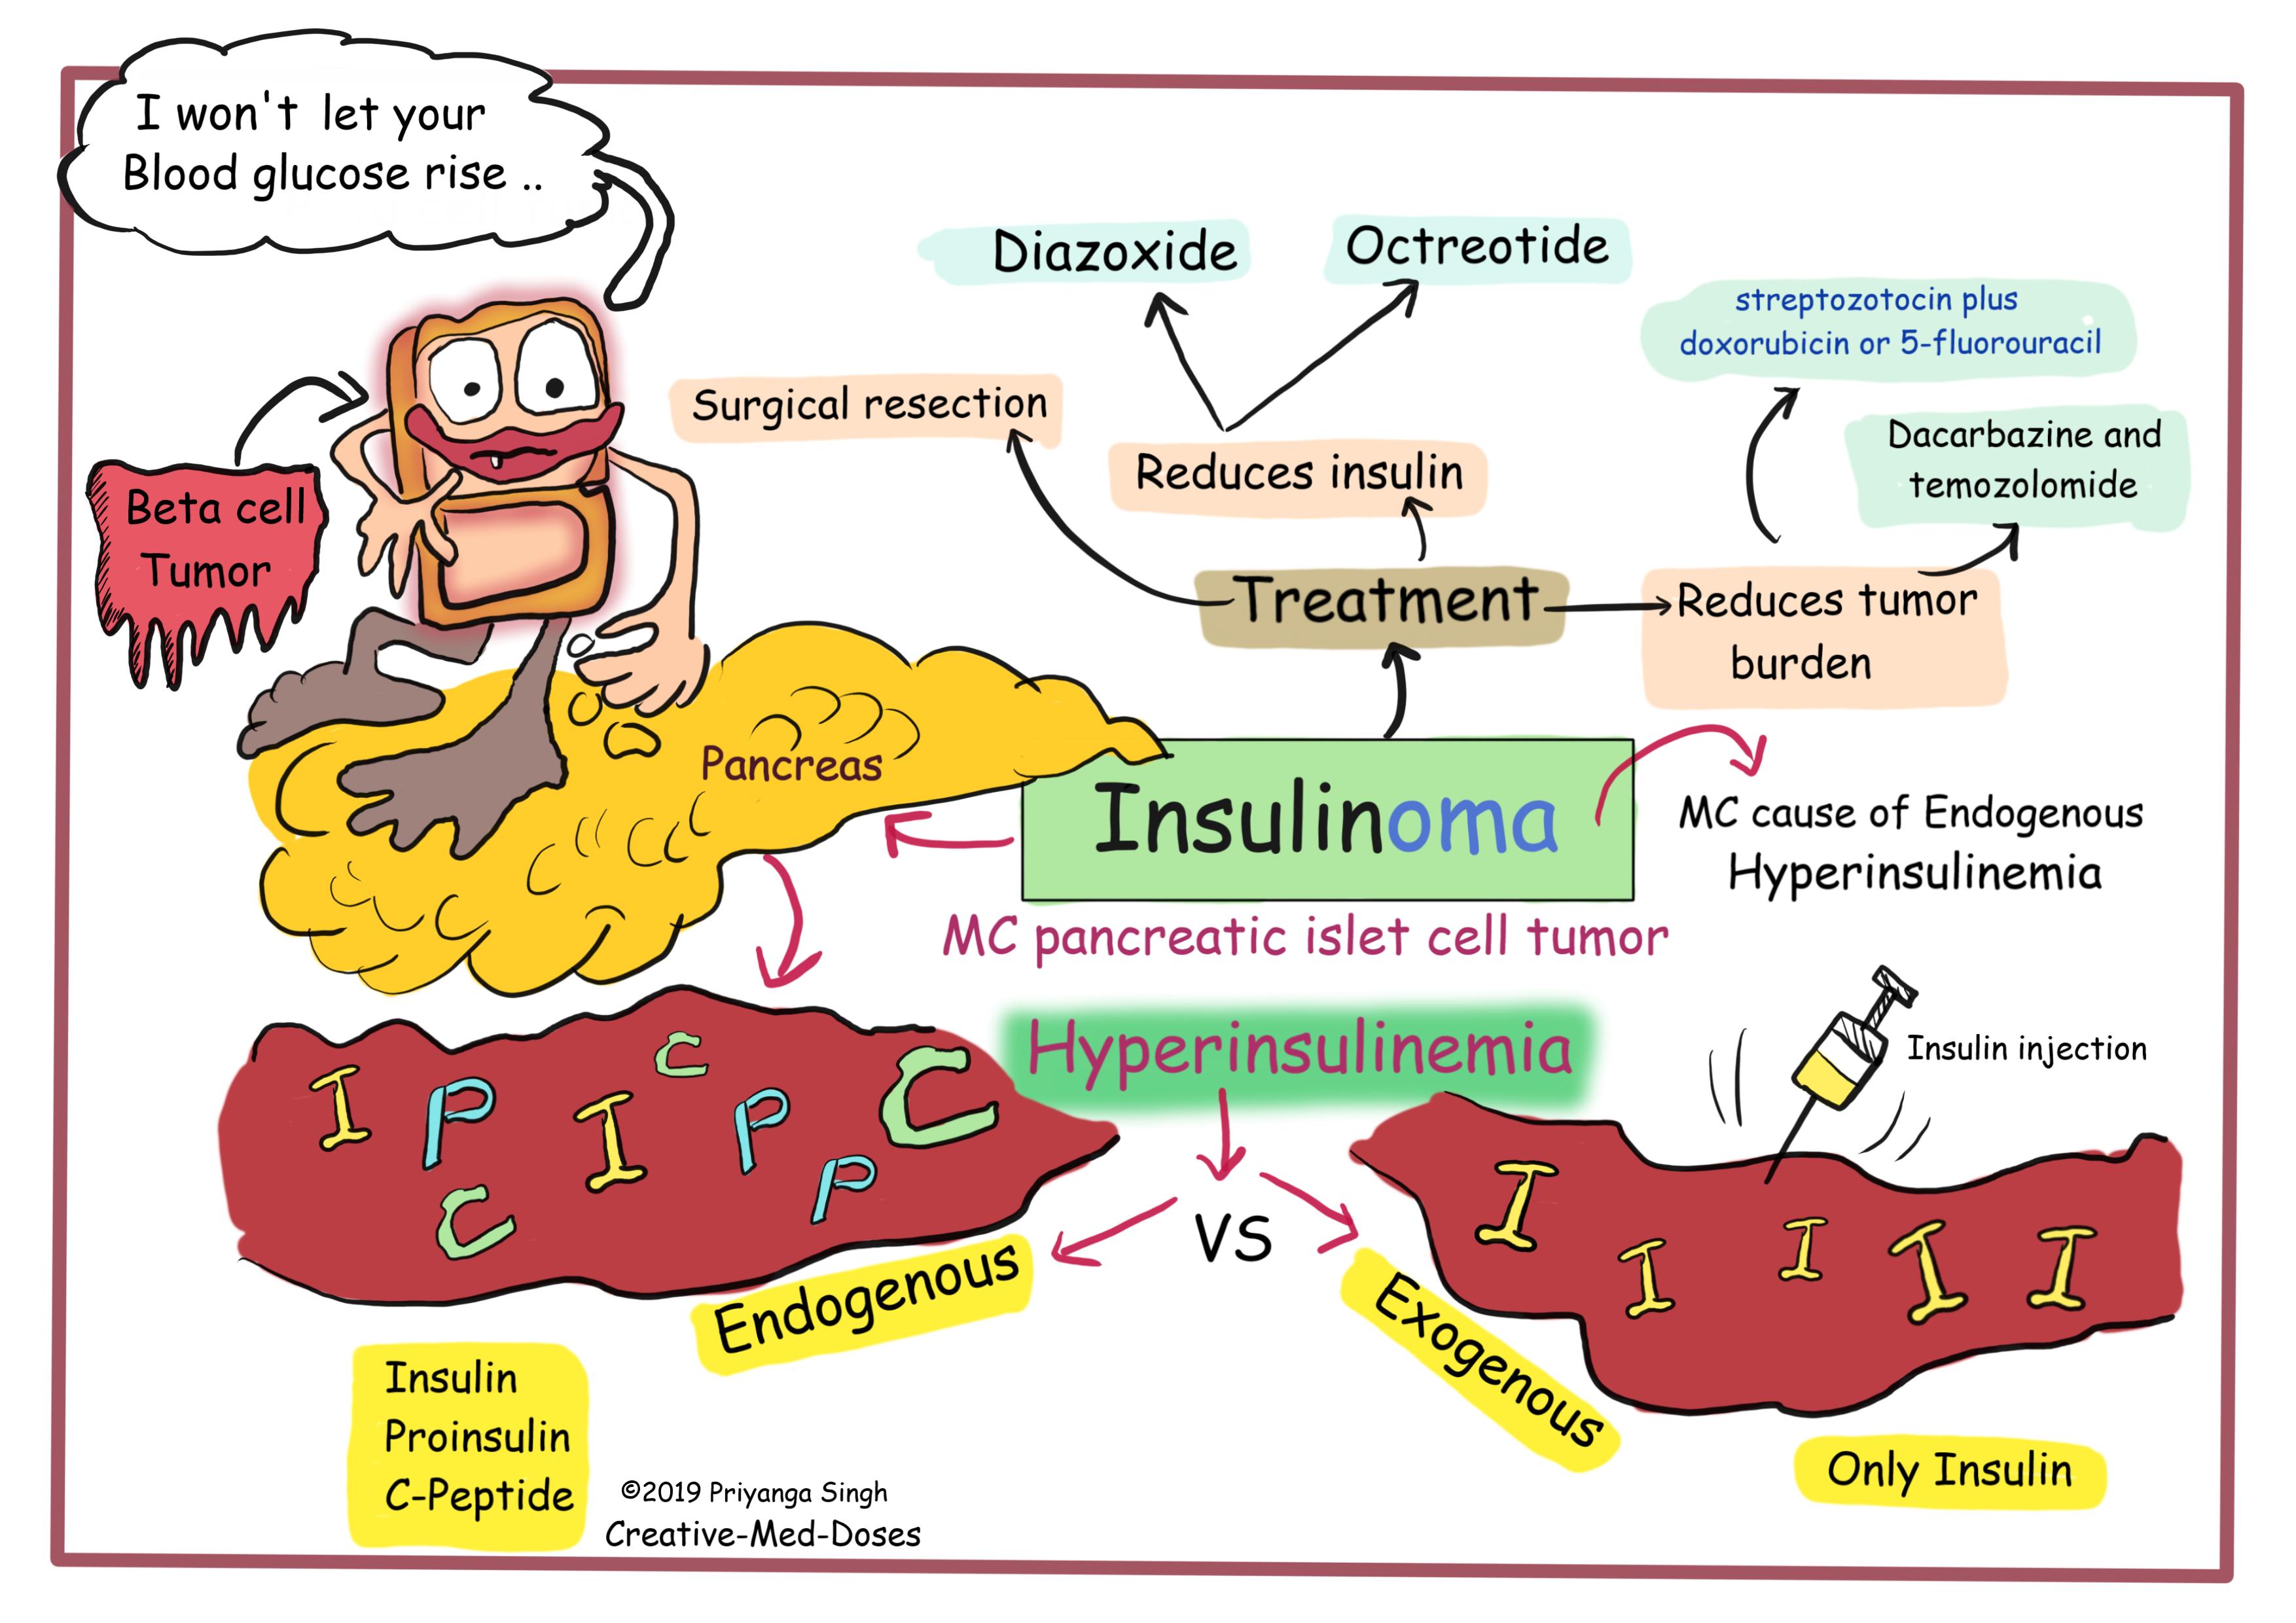 Insulinoma visual map, description of treatment and lab values